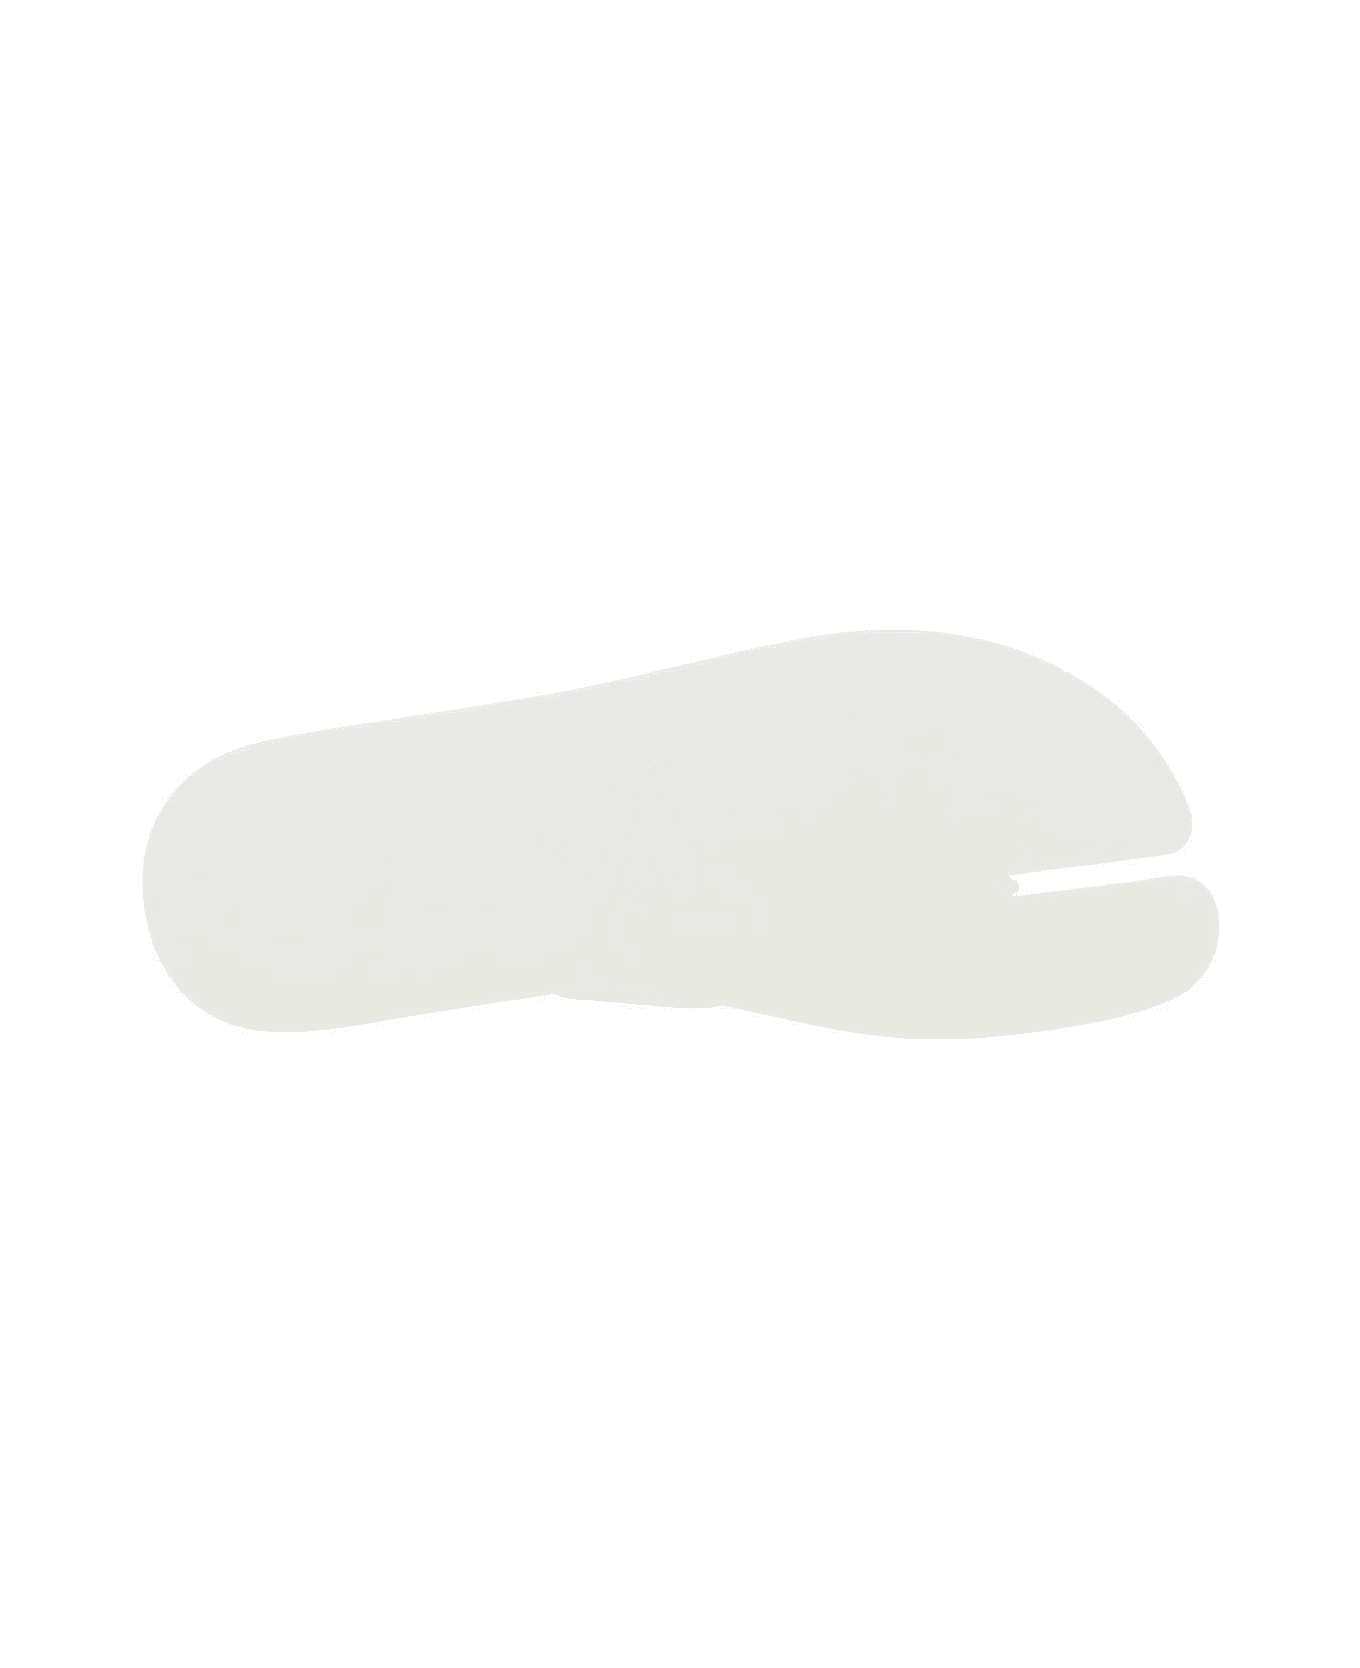 Maison Margiela Tabi Flip Flop Sandals - White